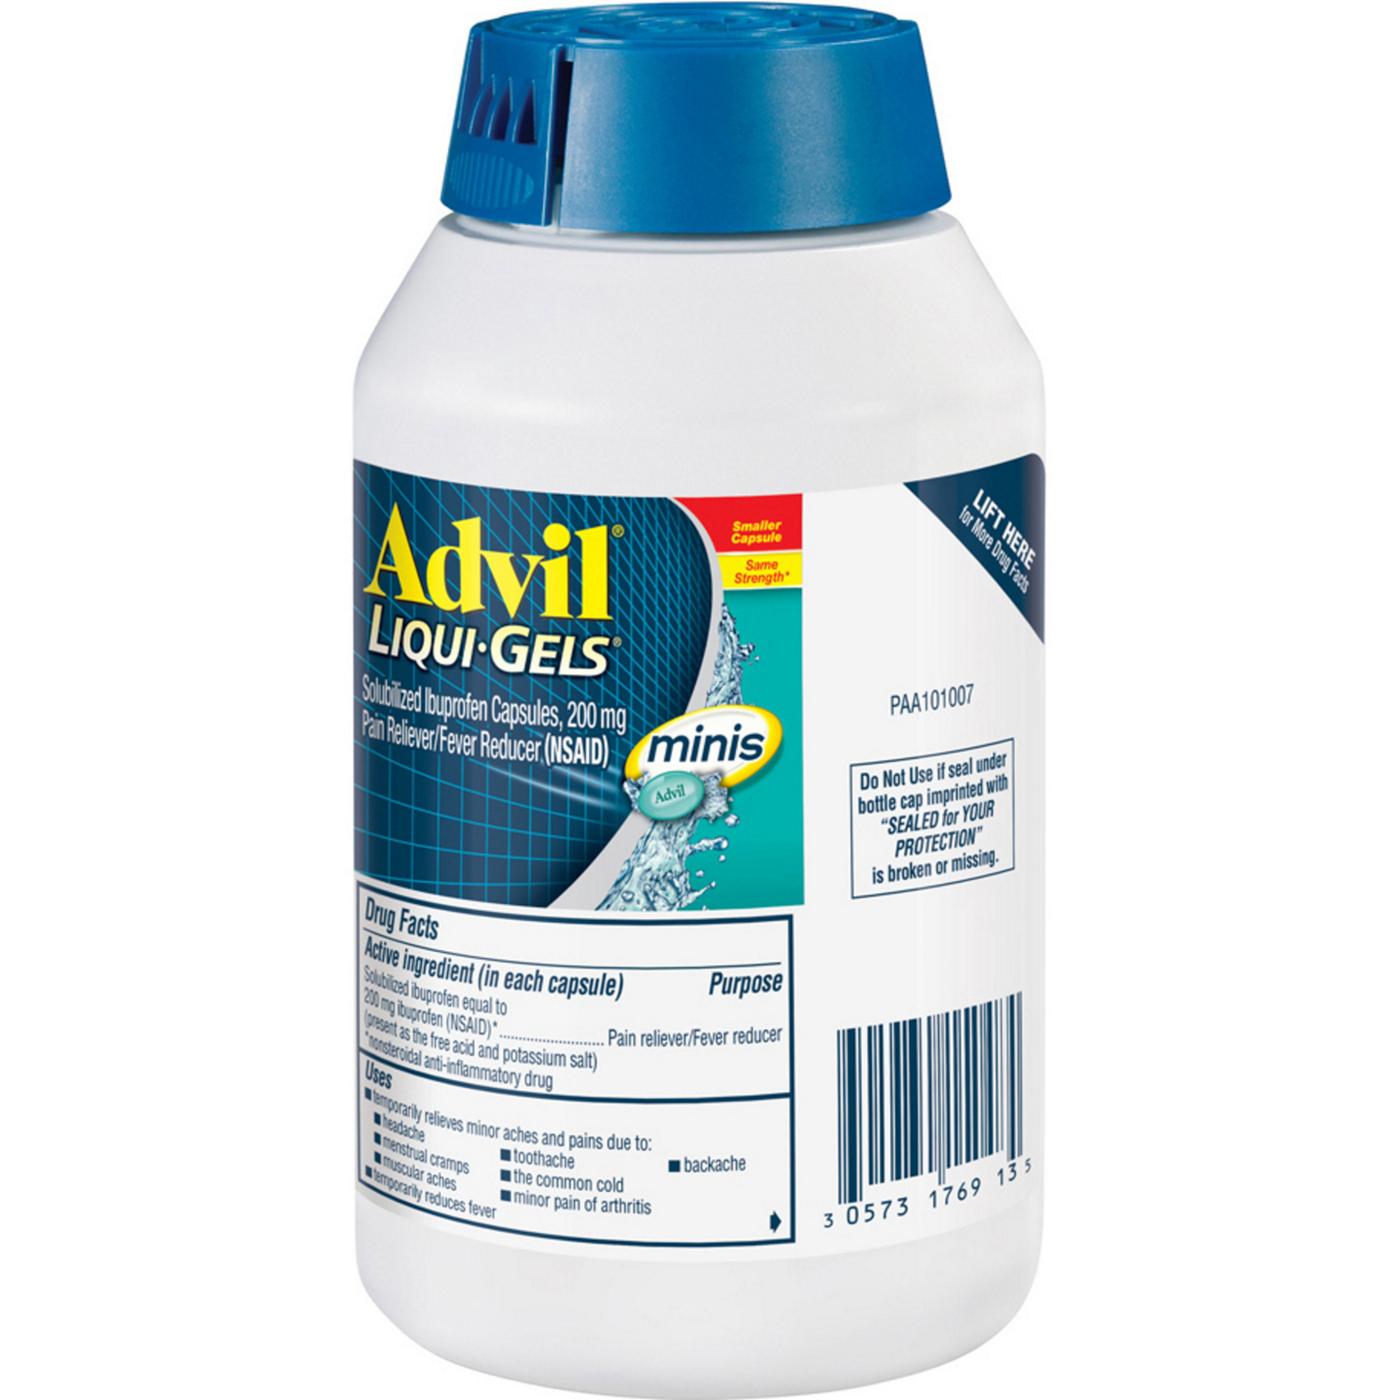 Advil Liqui-Gels Minis Pain Reliever Ibuprofen 200 mg; image 7 of 9